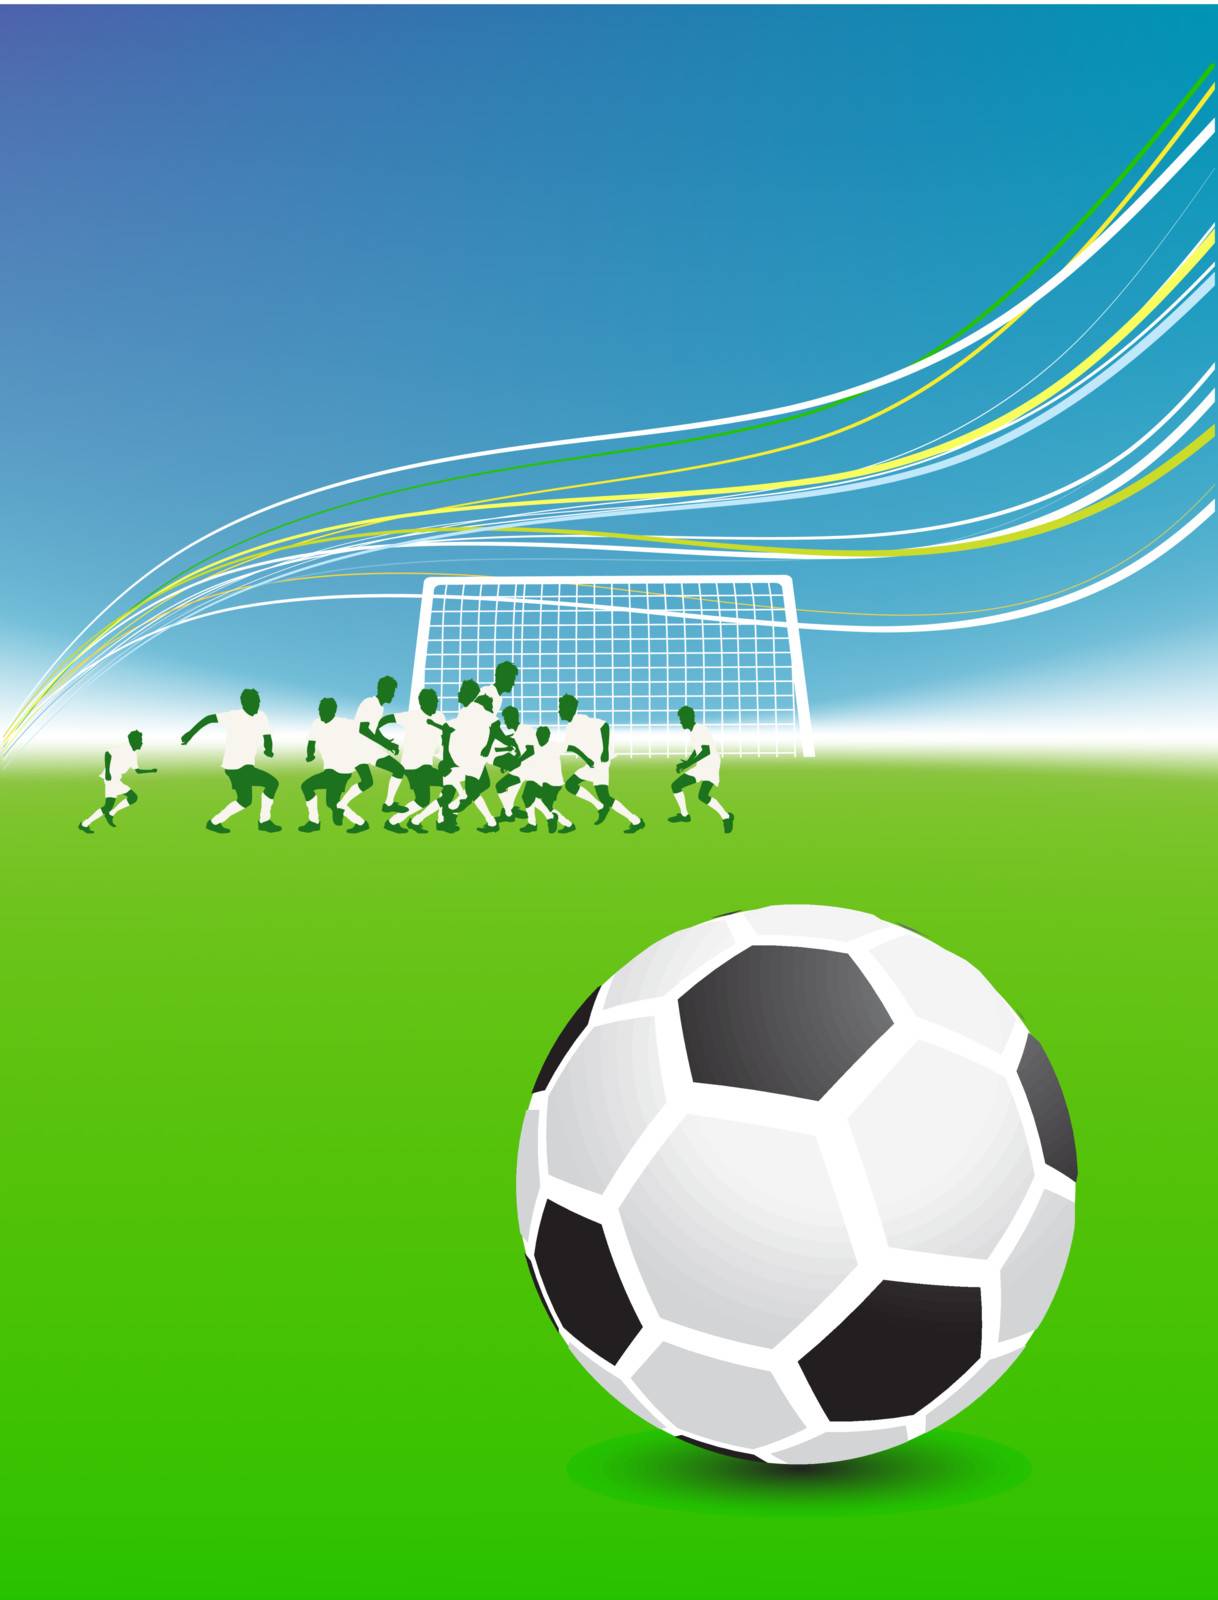 Football players on field, soccer ball by Kudryashka